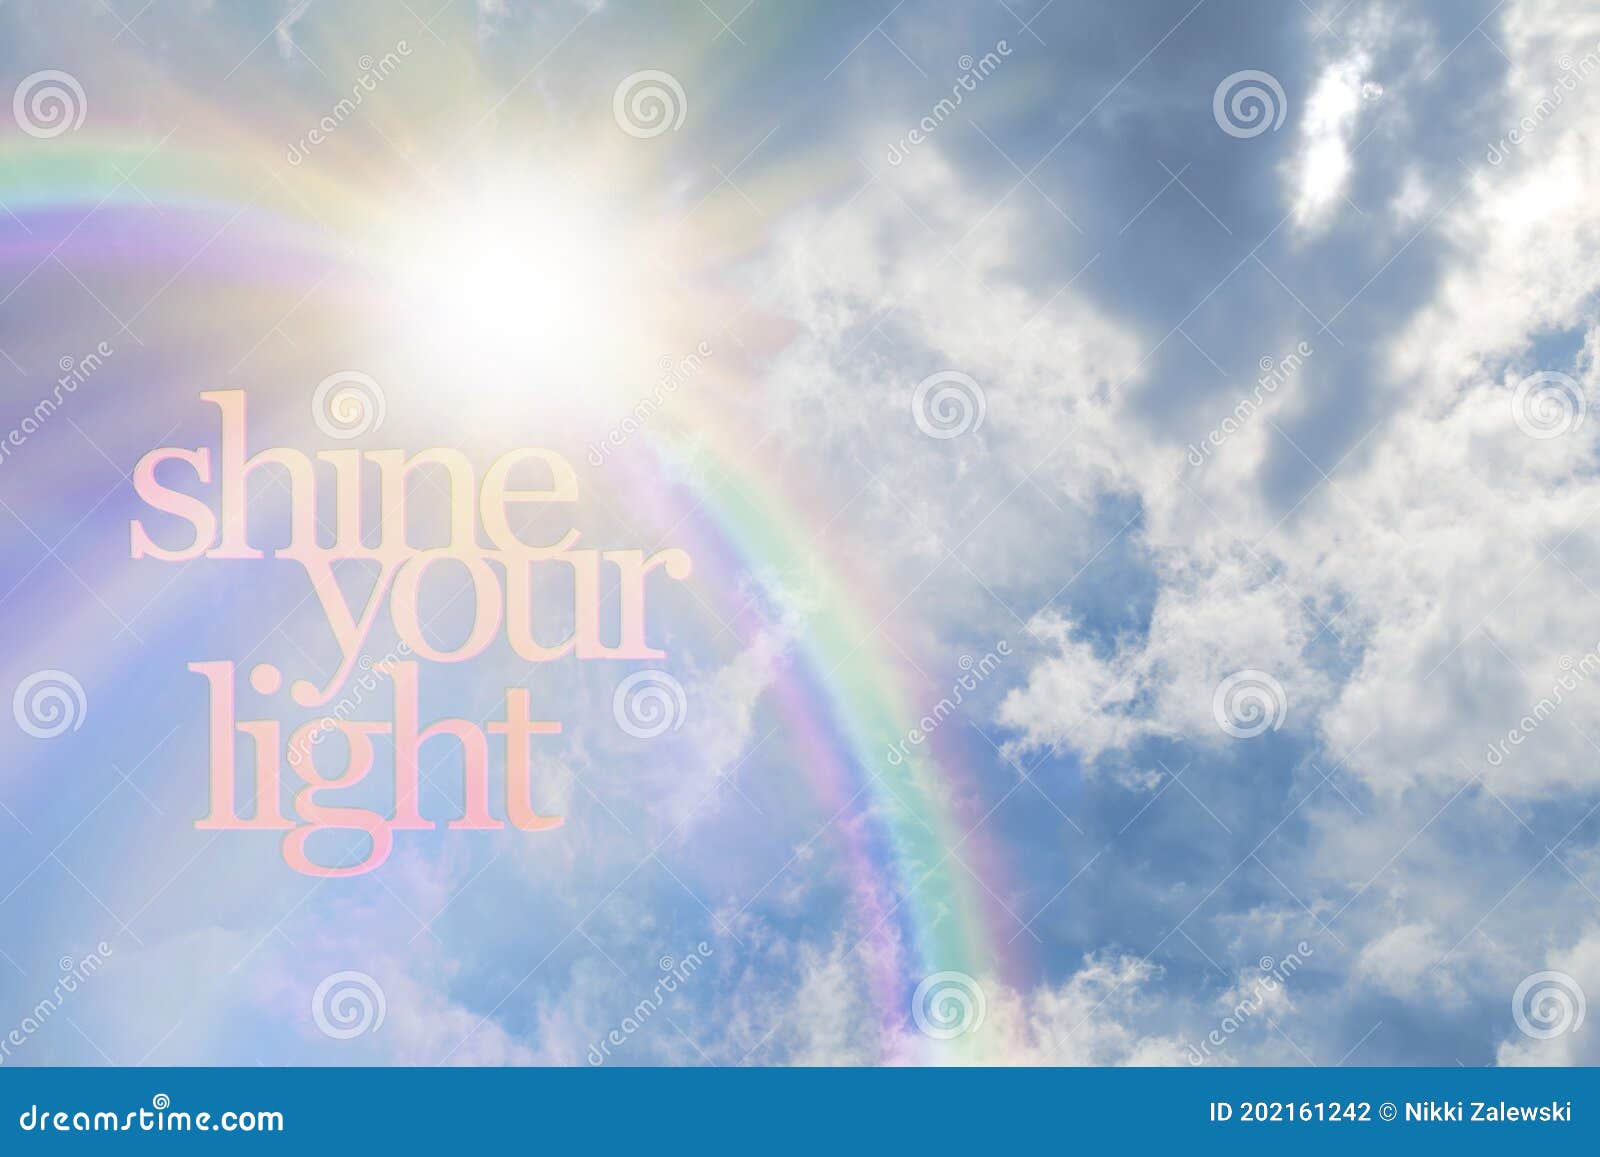 shine your light rainbow sunshine cloud concept